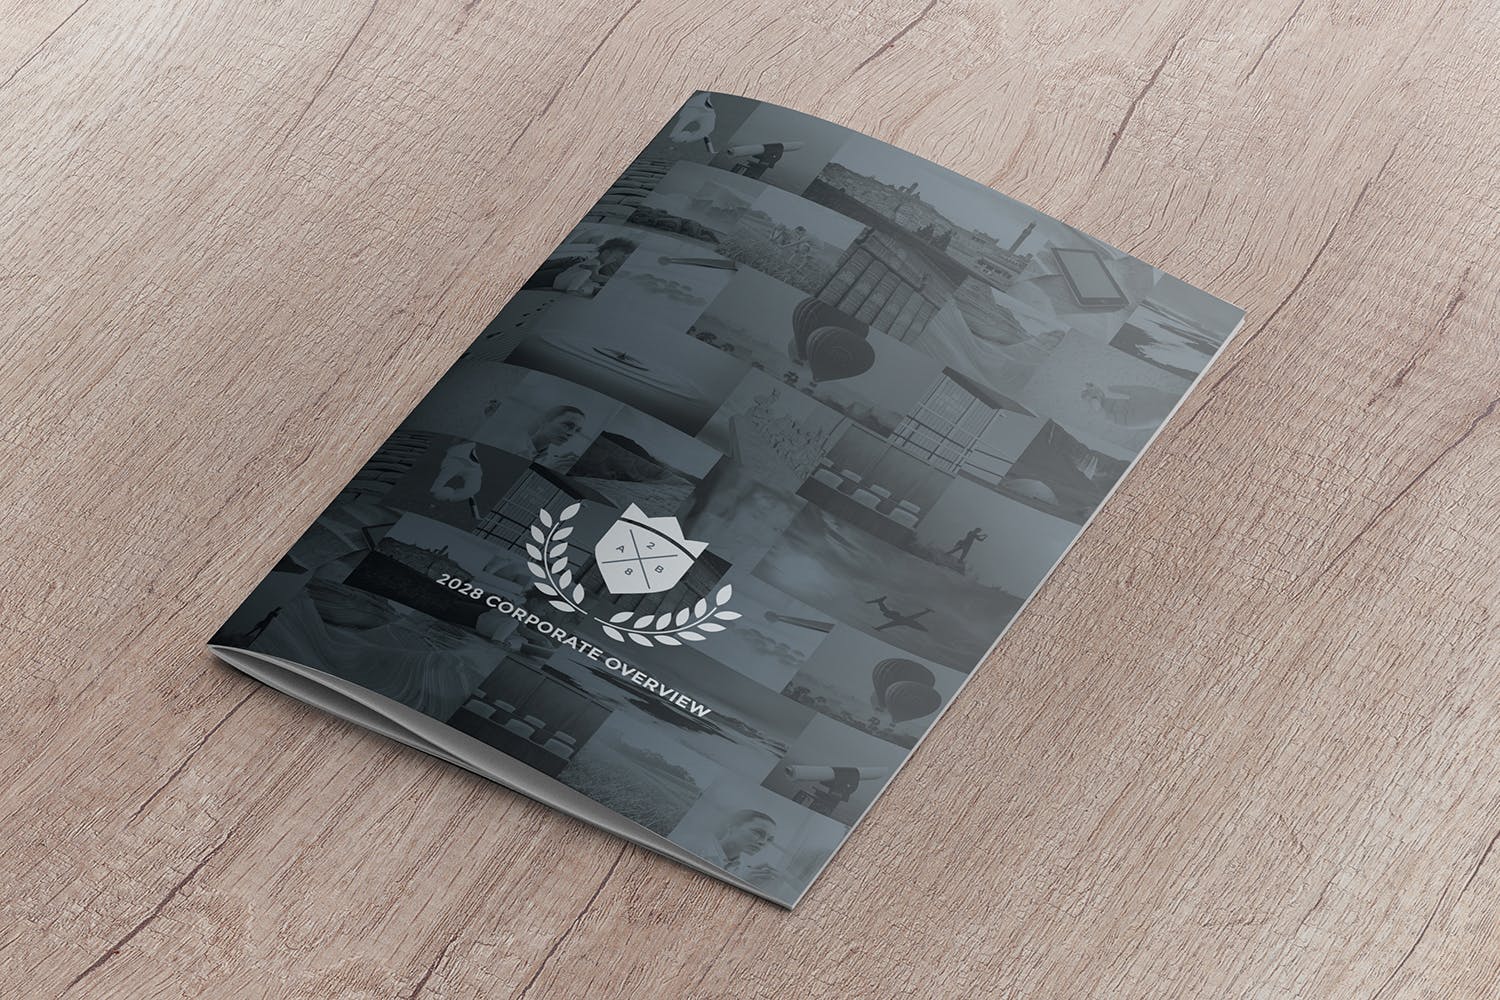 A4尺寸企业/品牌宣传册封面效果图样机第一素材精选模板 A4 Brochure Cover Mockup Perspective View插图(2)